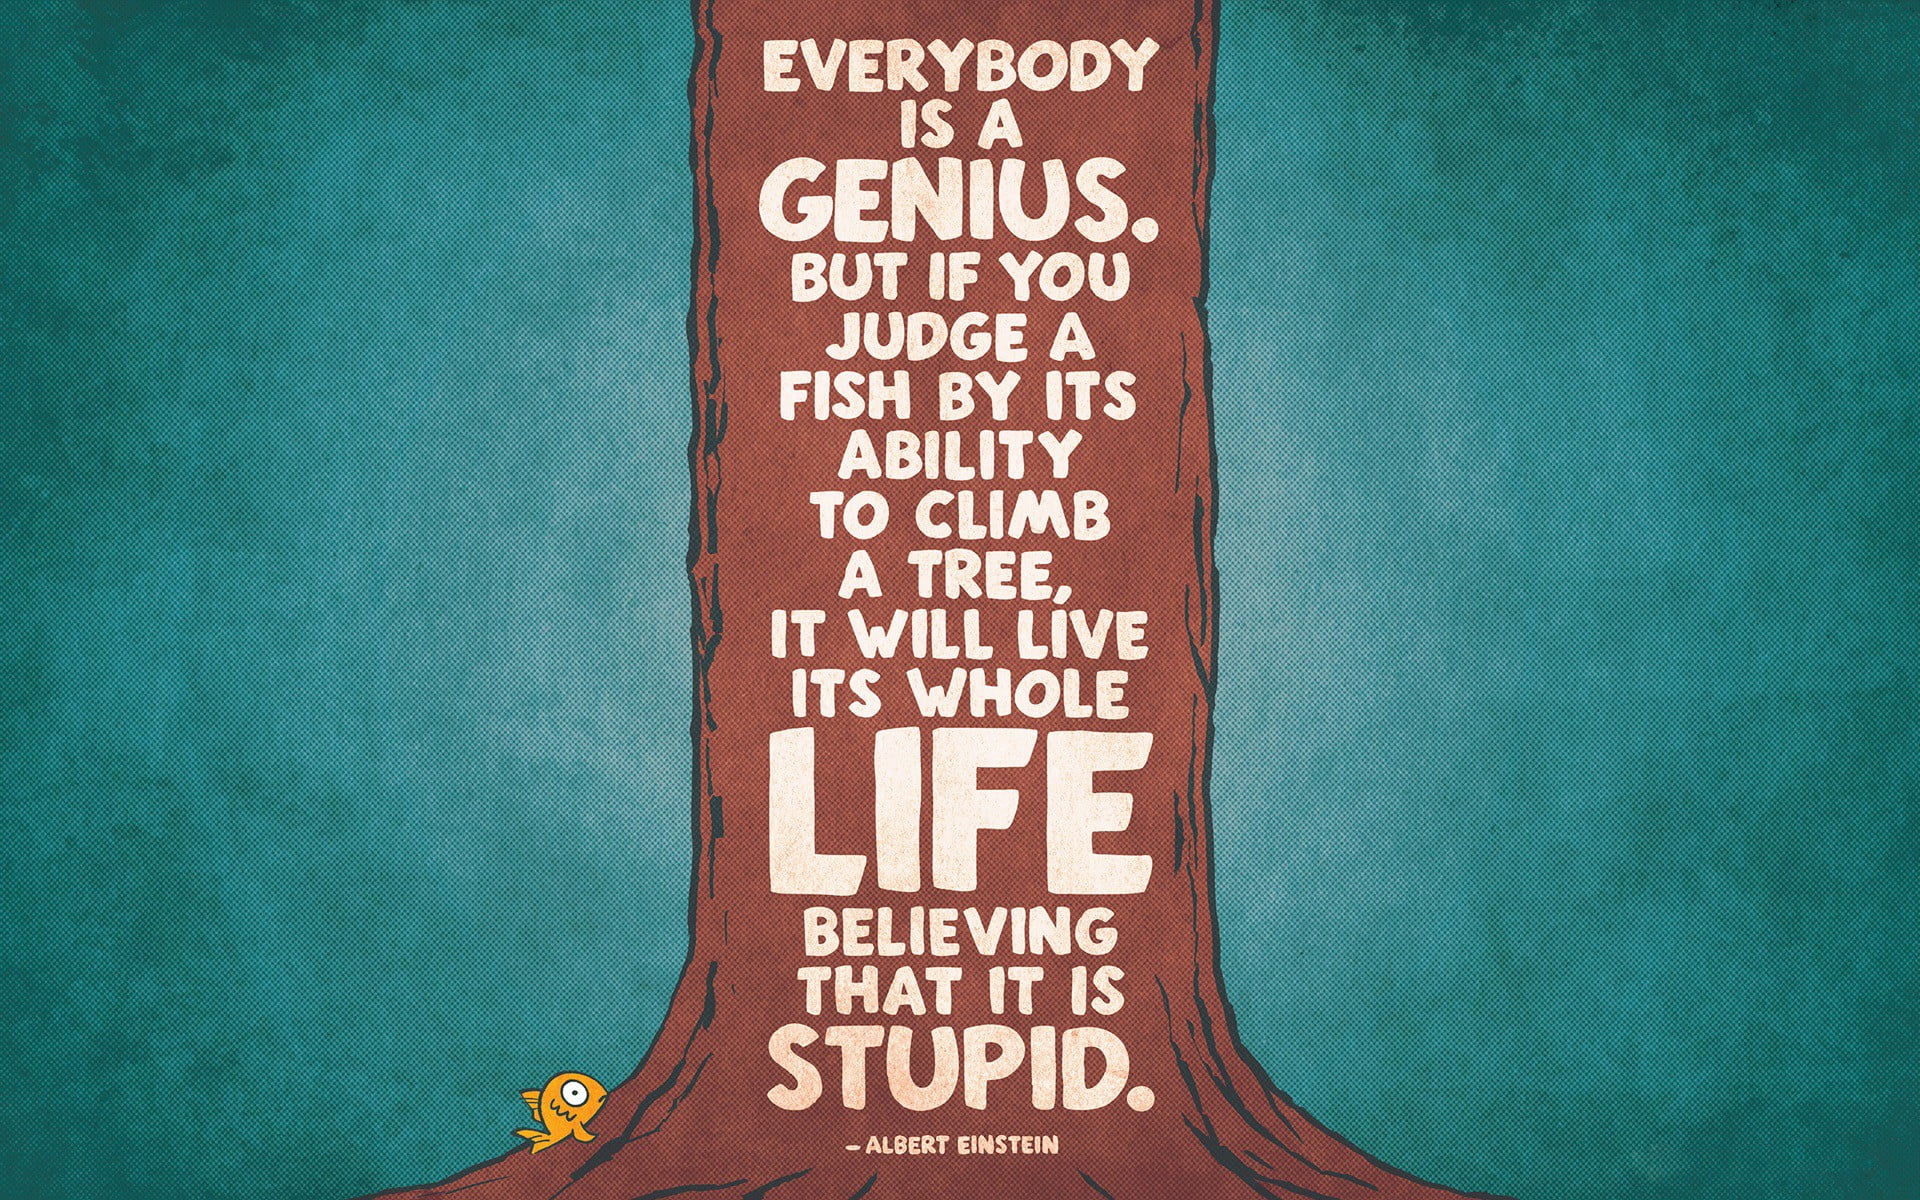 Albert Einstein quote, everybody is a genius text, typography